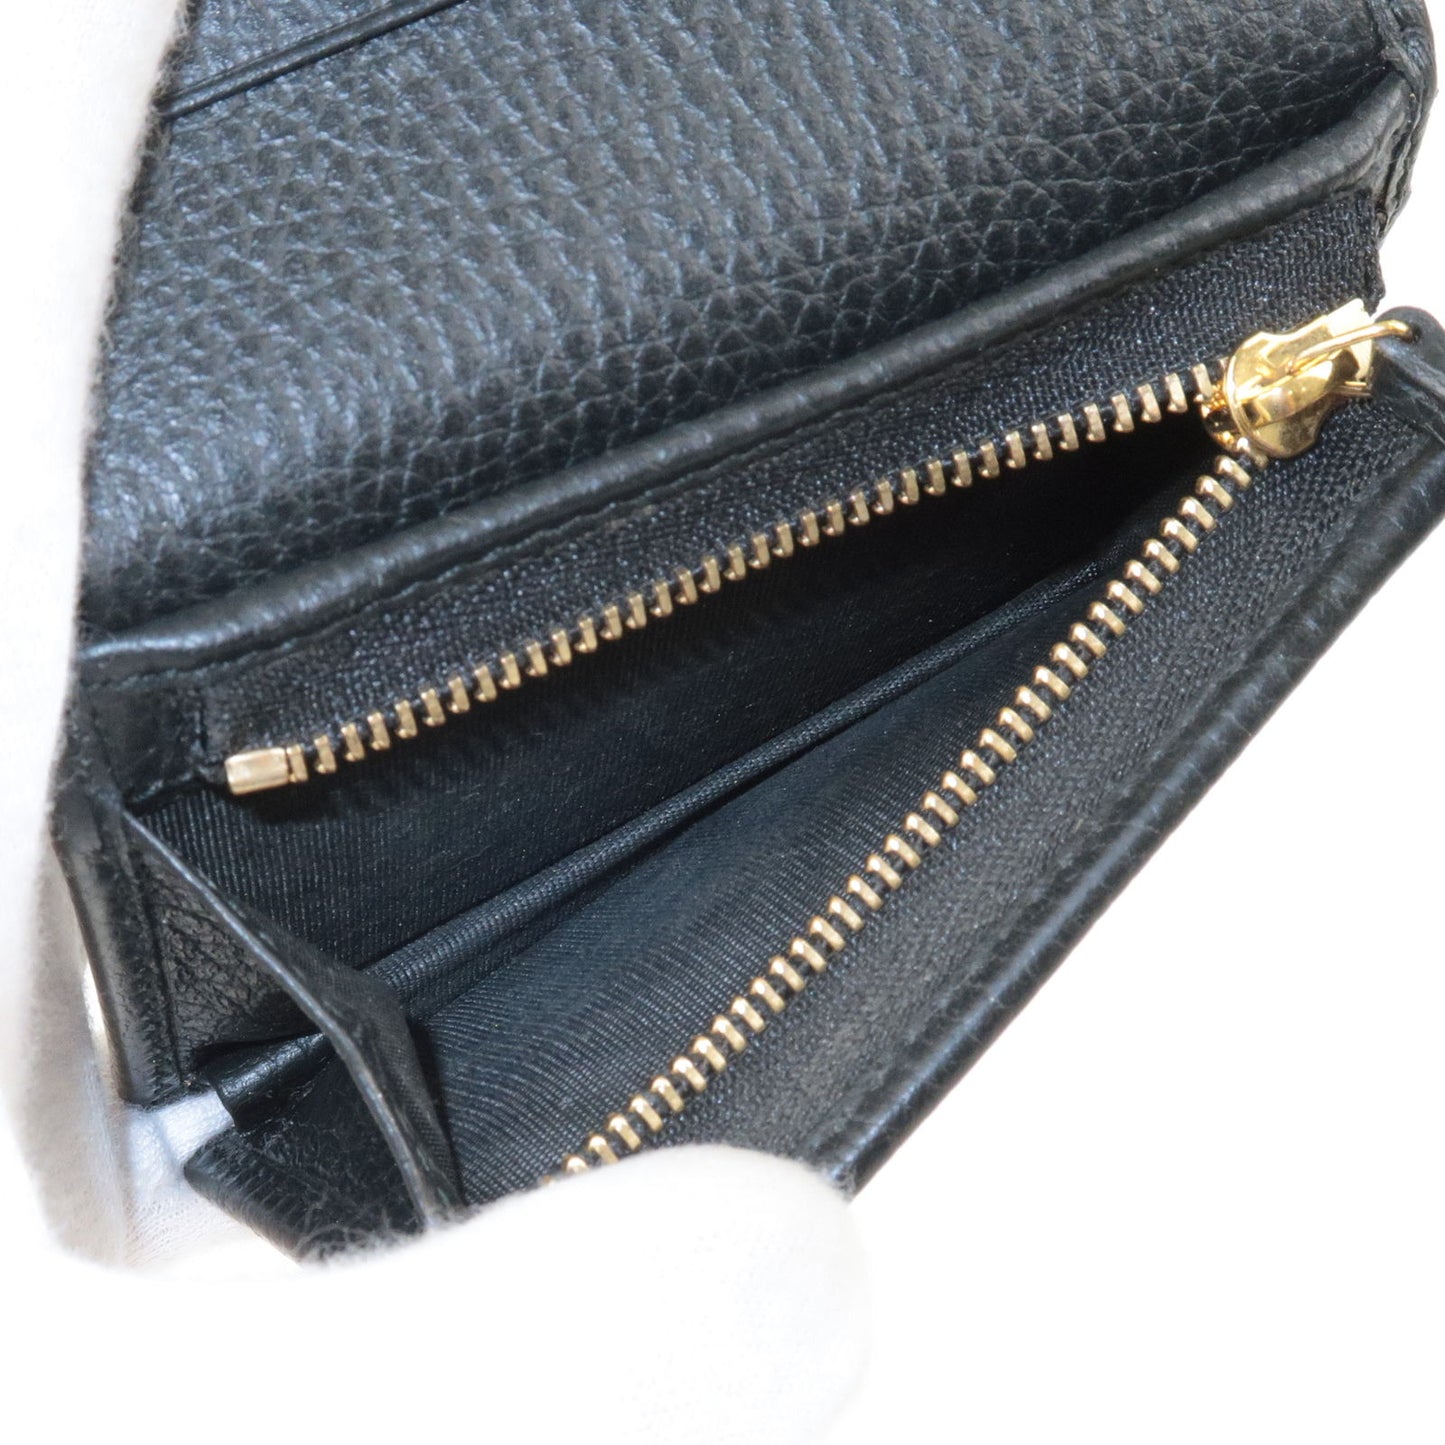 GUCCI GG Marmont Leather Bi Fold Wallet Black 456126